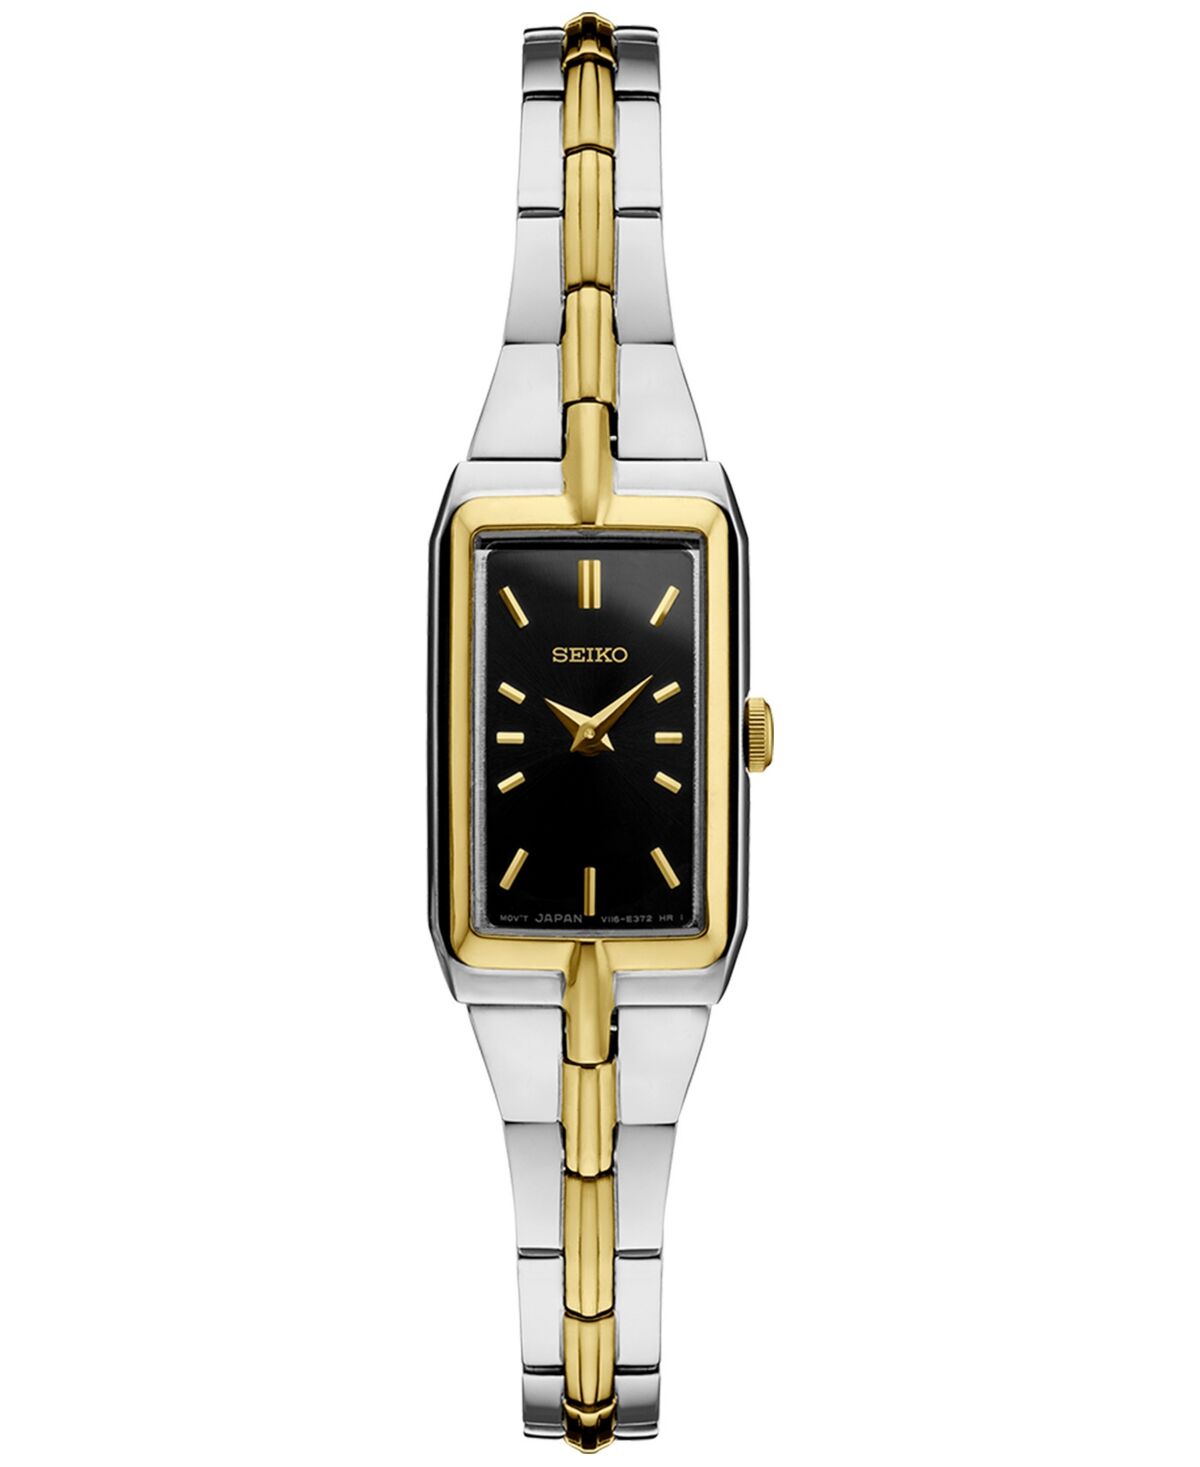 Seiko Women's Essential Two Tone Stainless Steel Bracelet Watch 15mm - Black